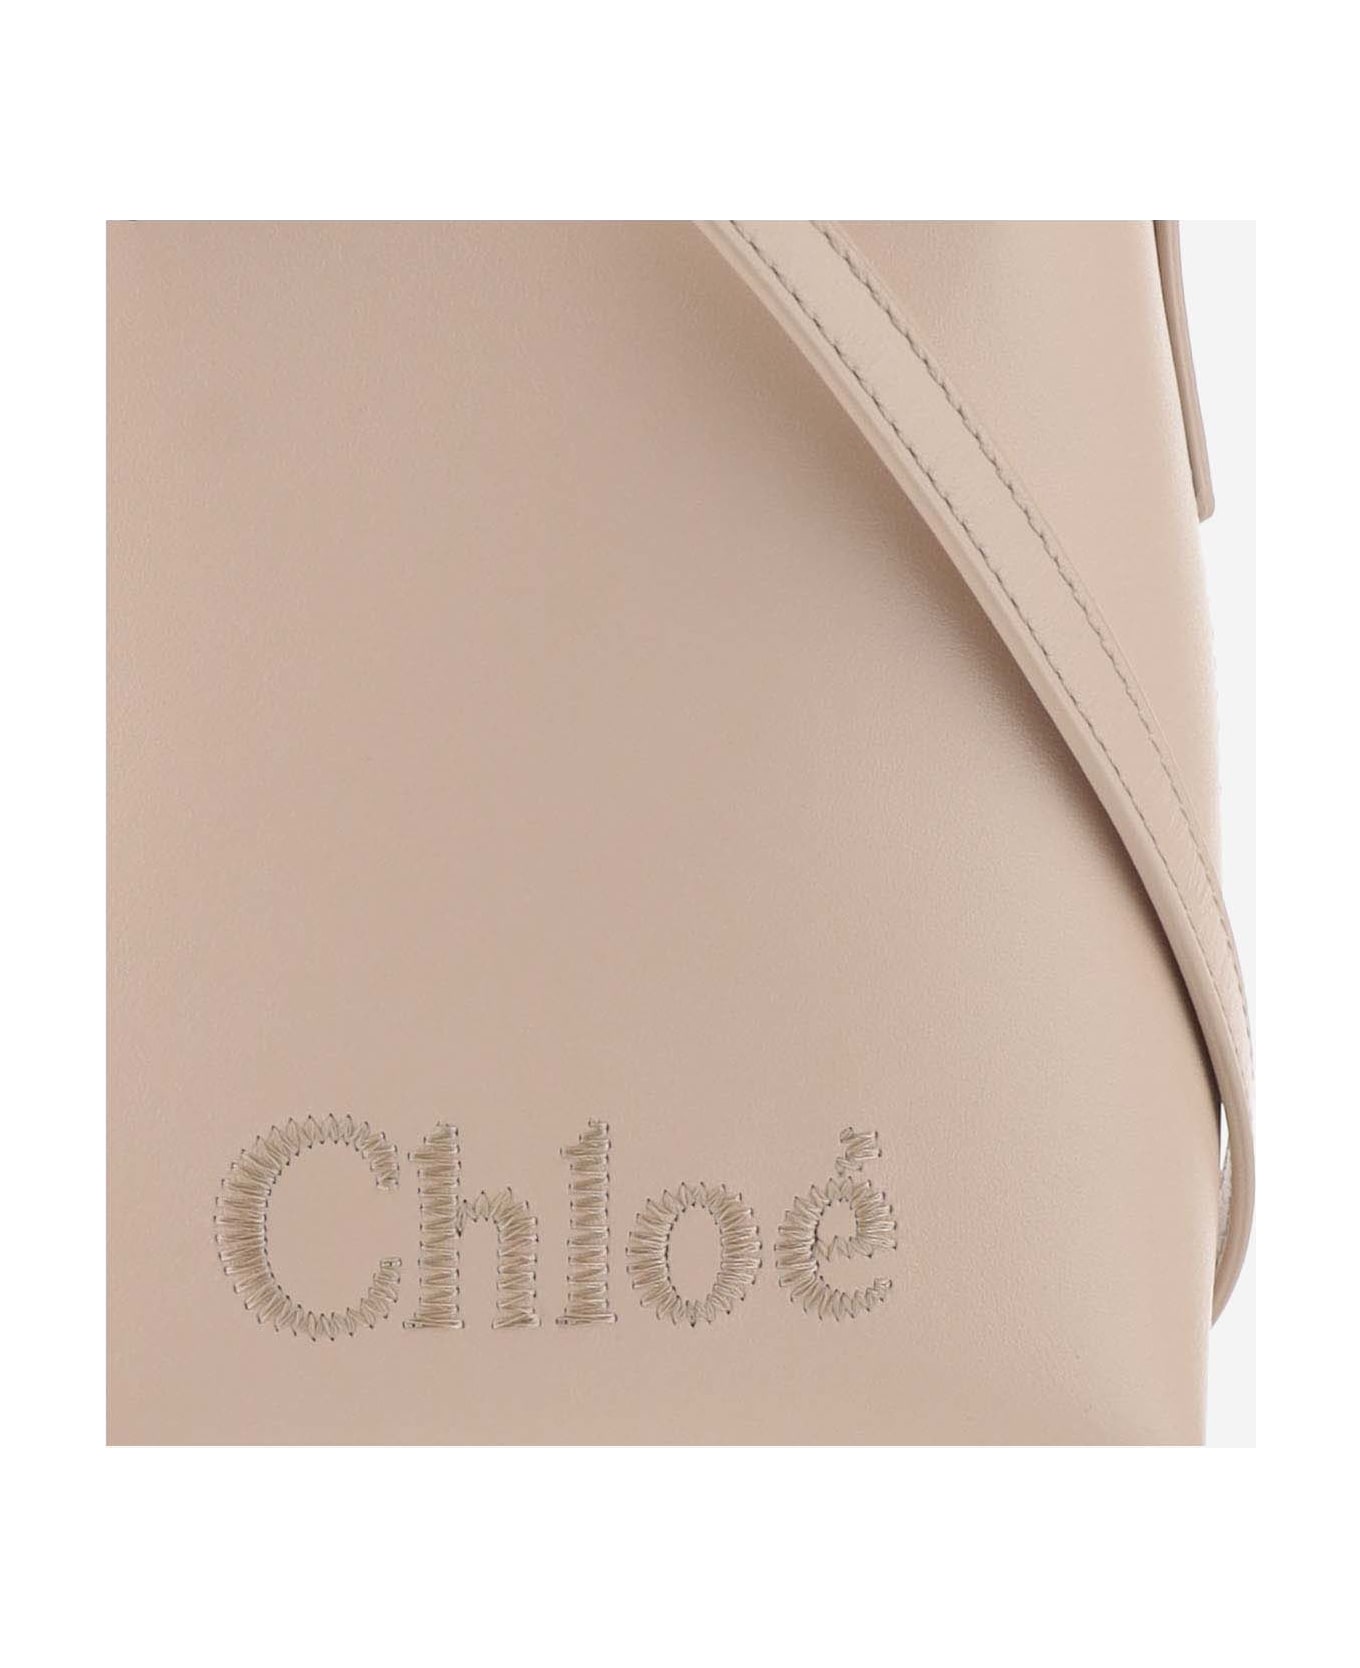 Chloé Sense Micro Tote Bag - CEMENT pink トートバッグ